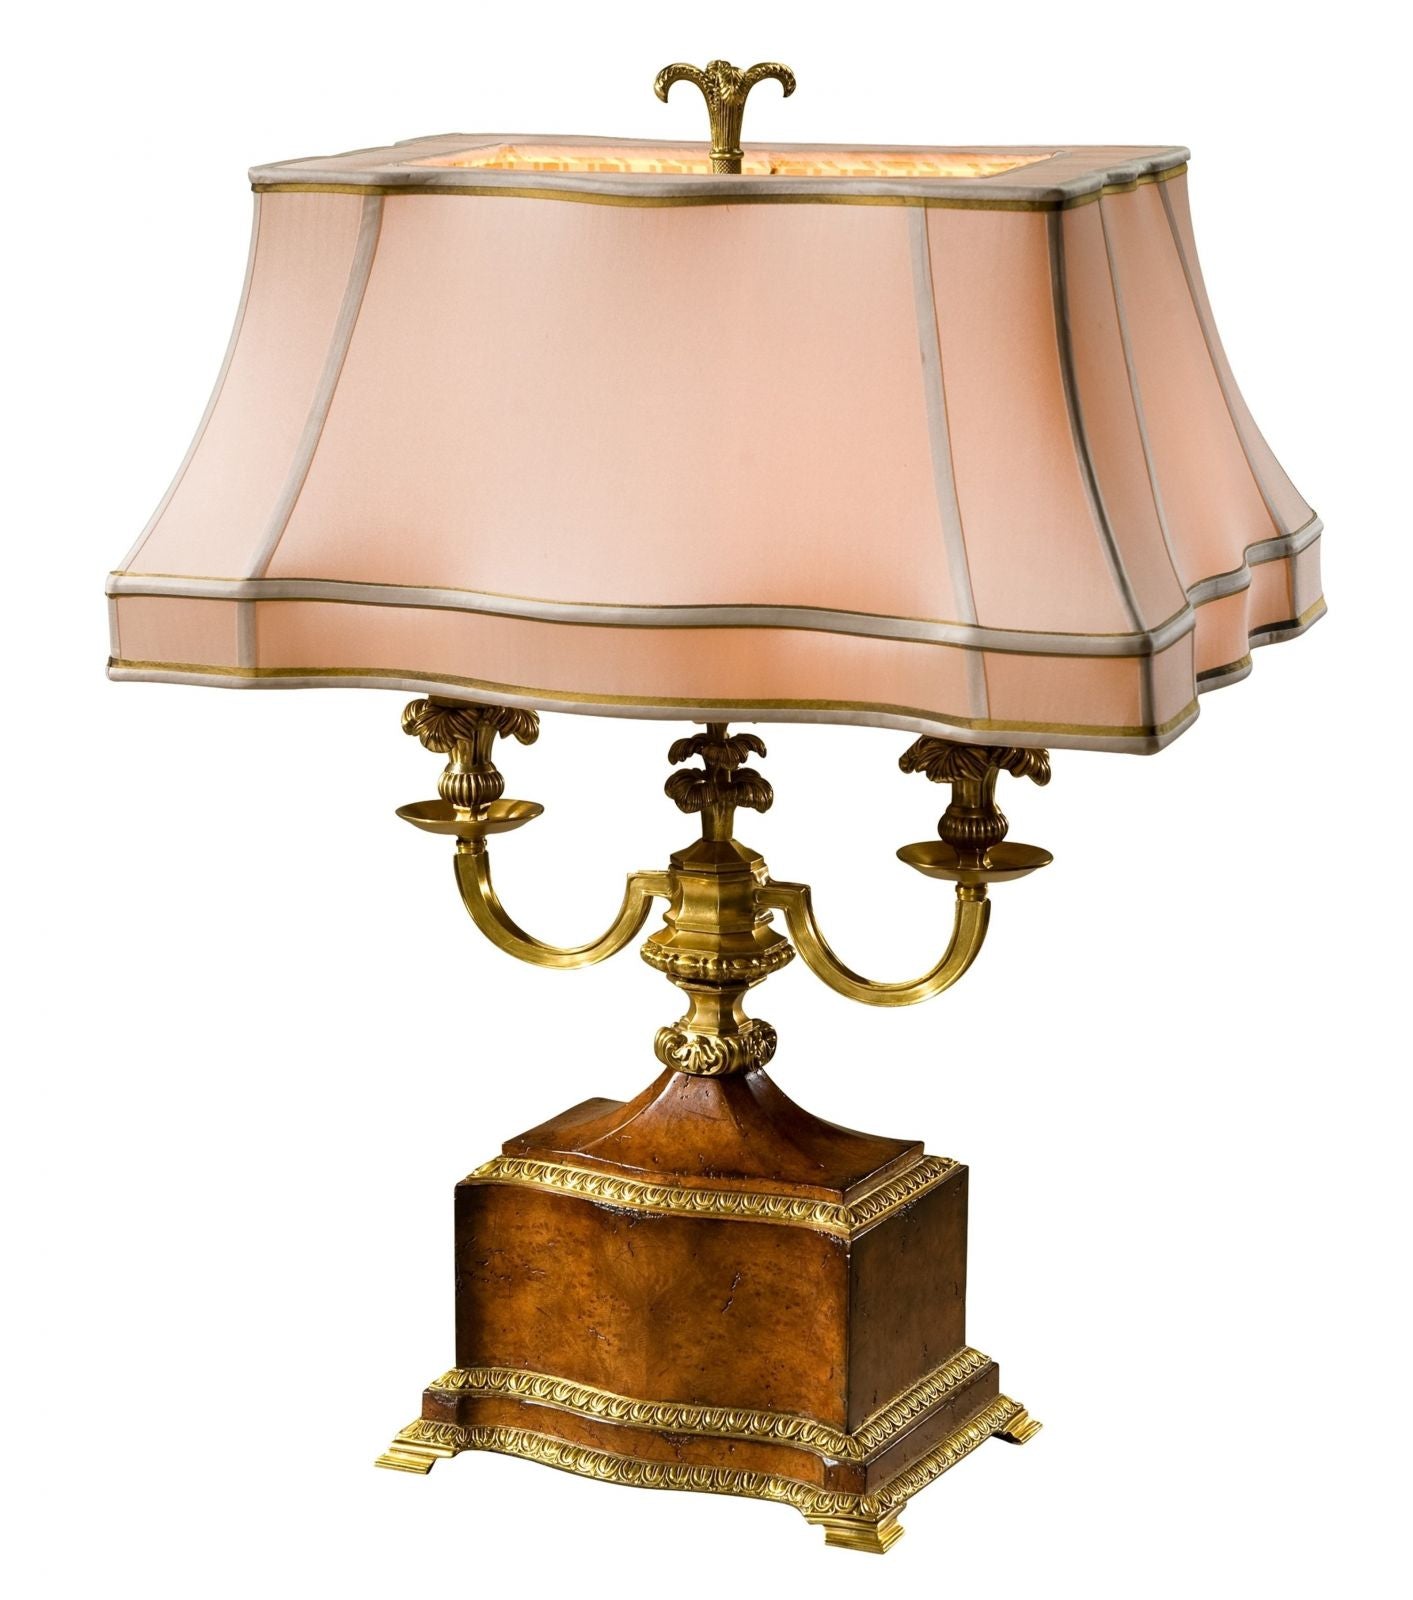 Louis XVI Inspired table lamp